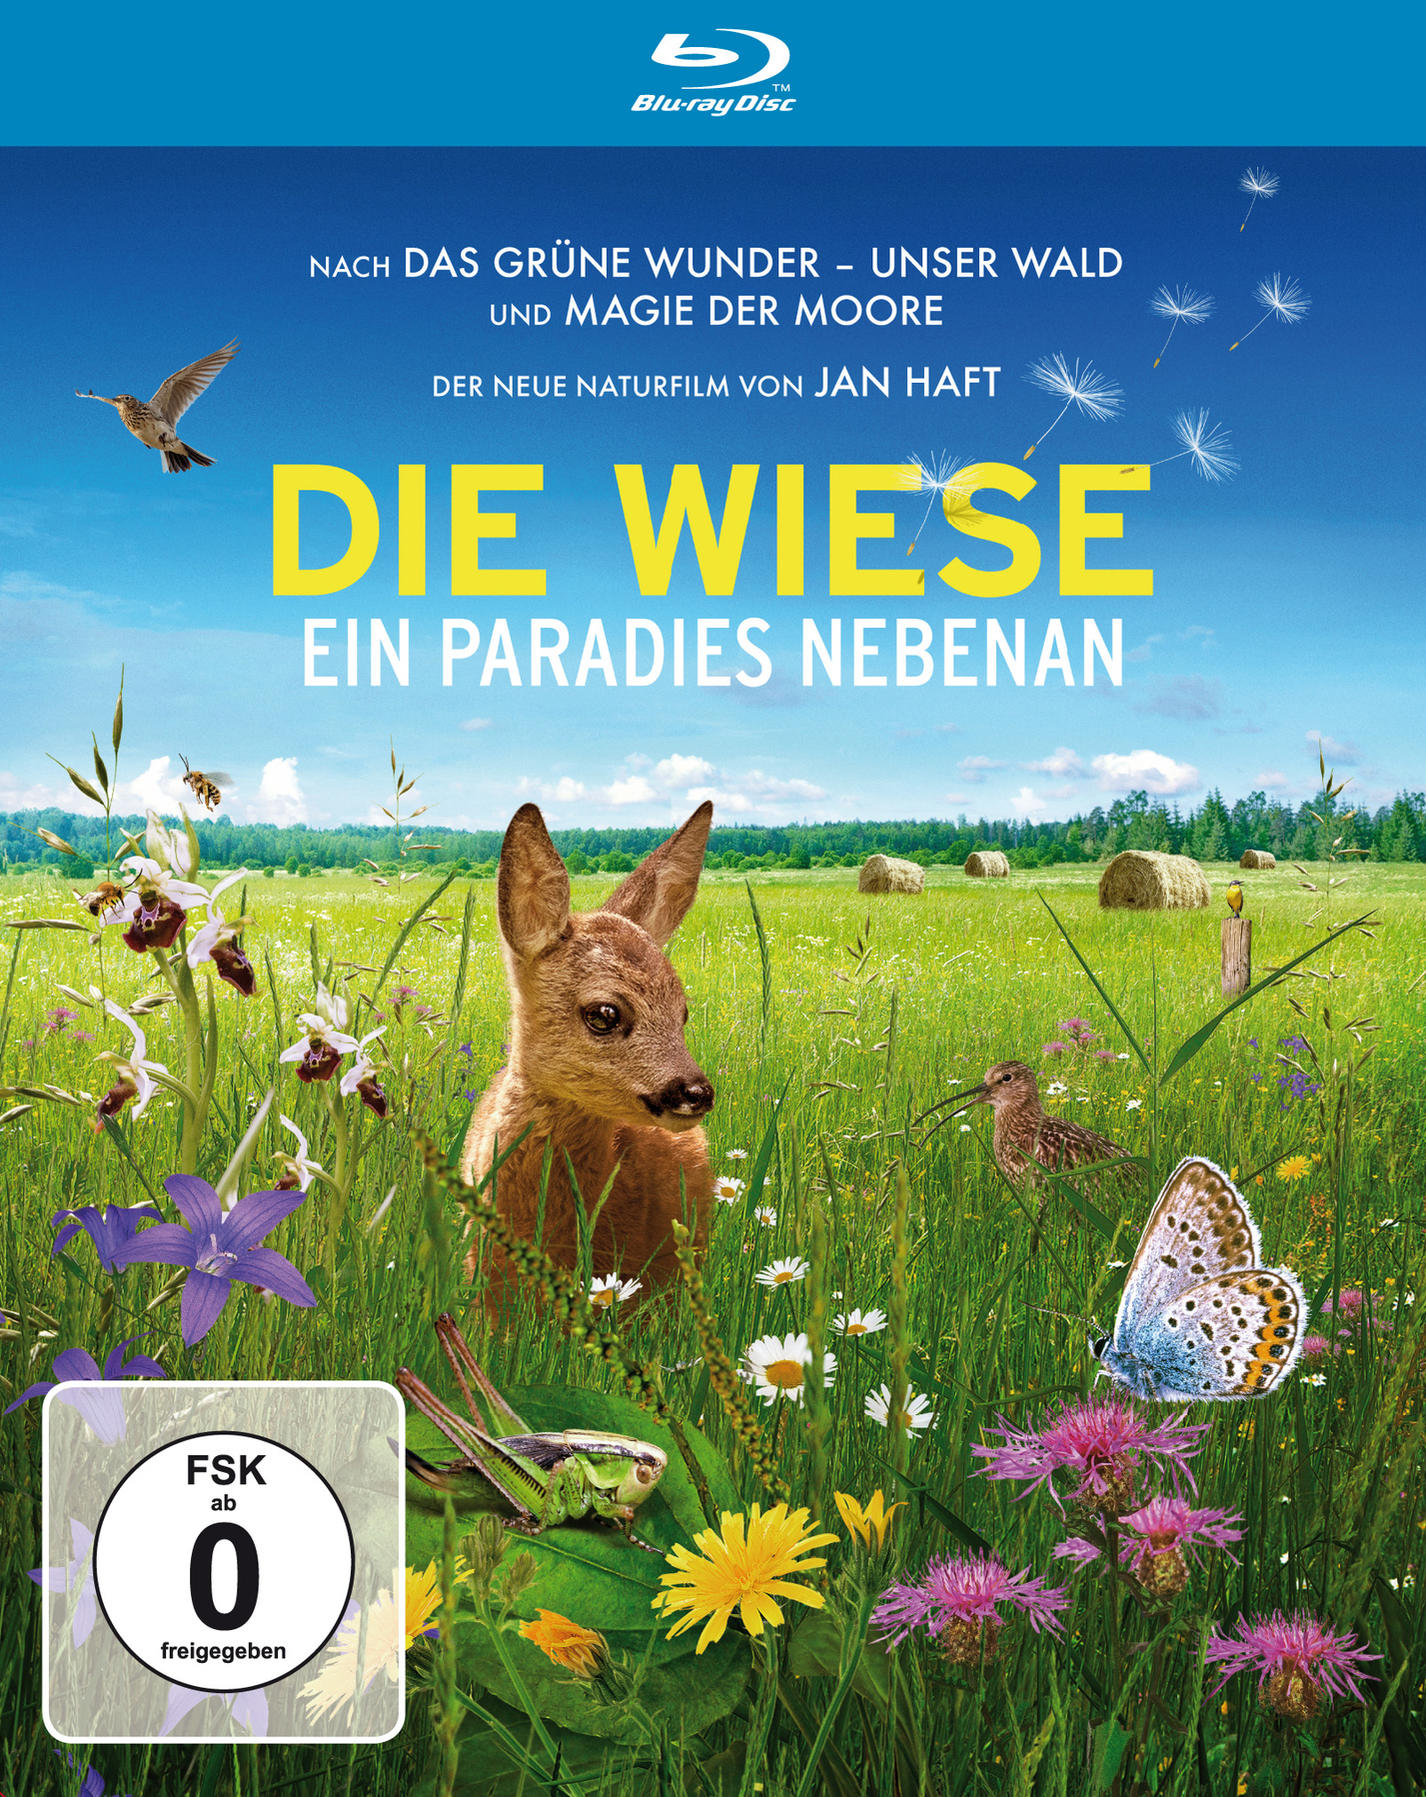 Die Wiese-Ein Blu-ray Nebenan Paradies